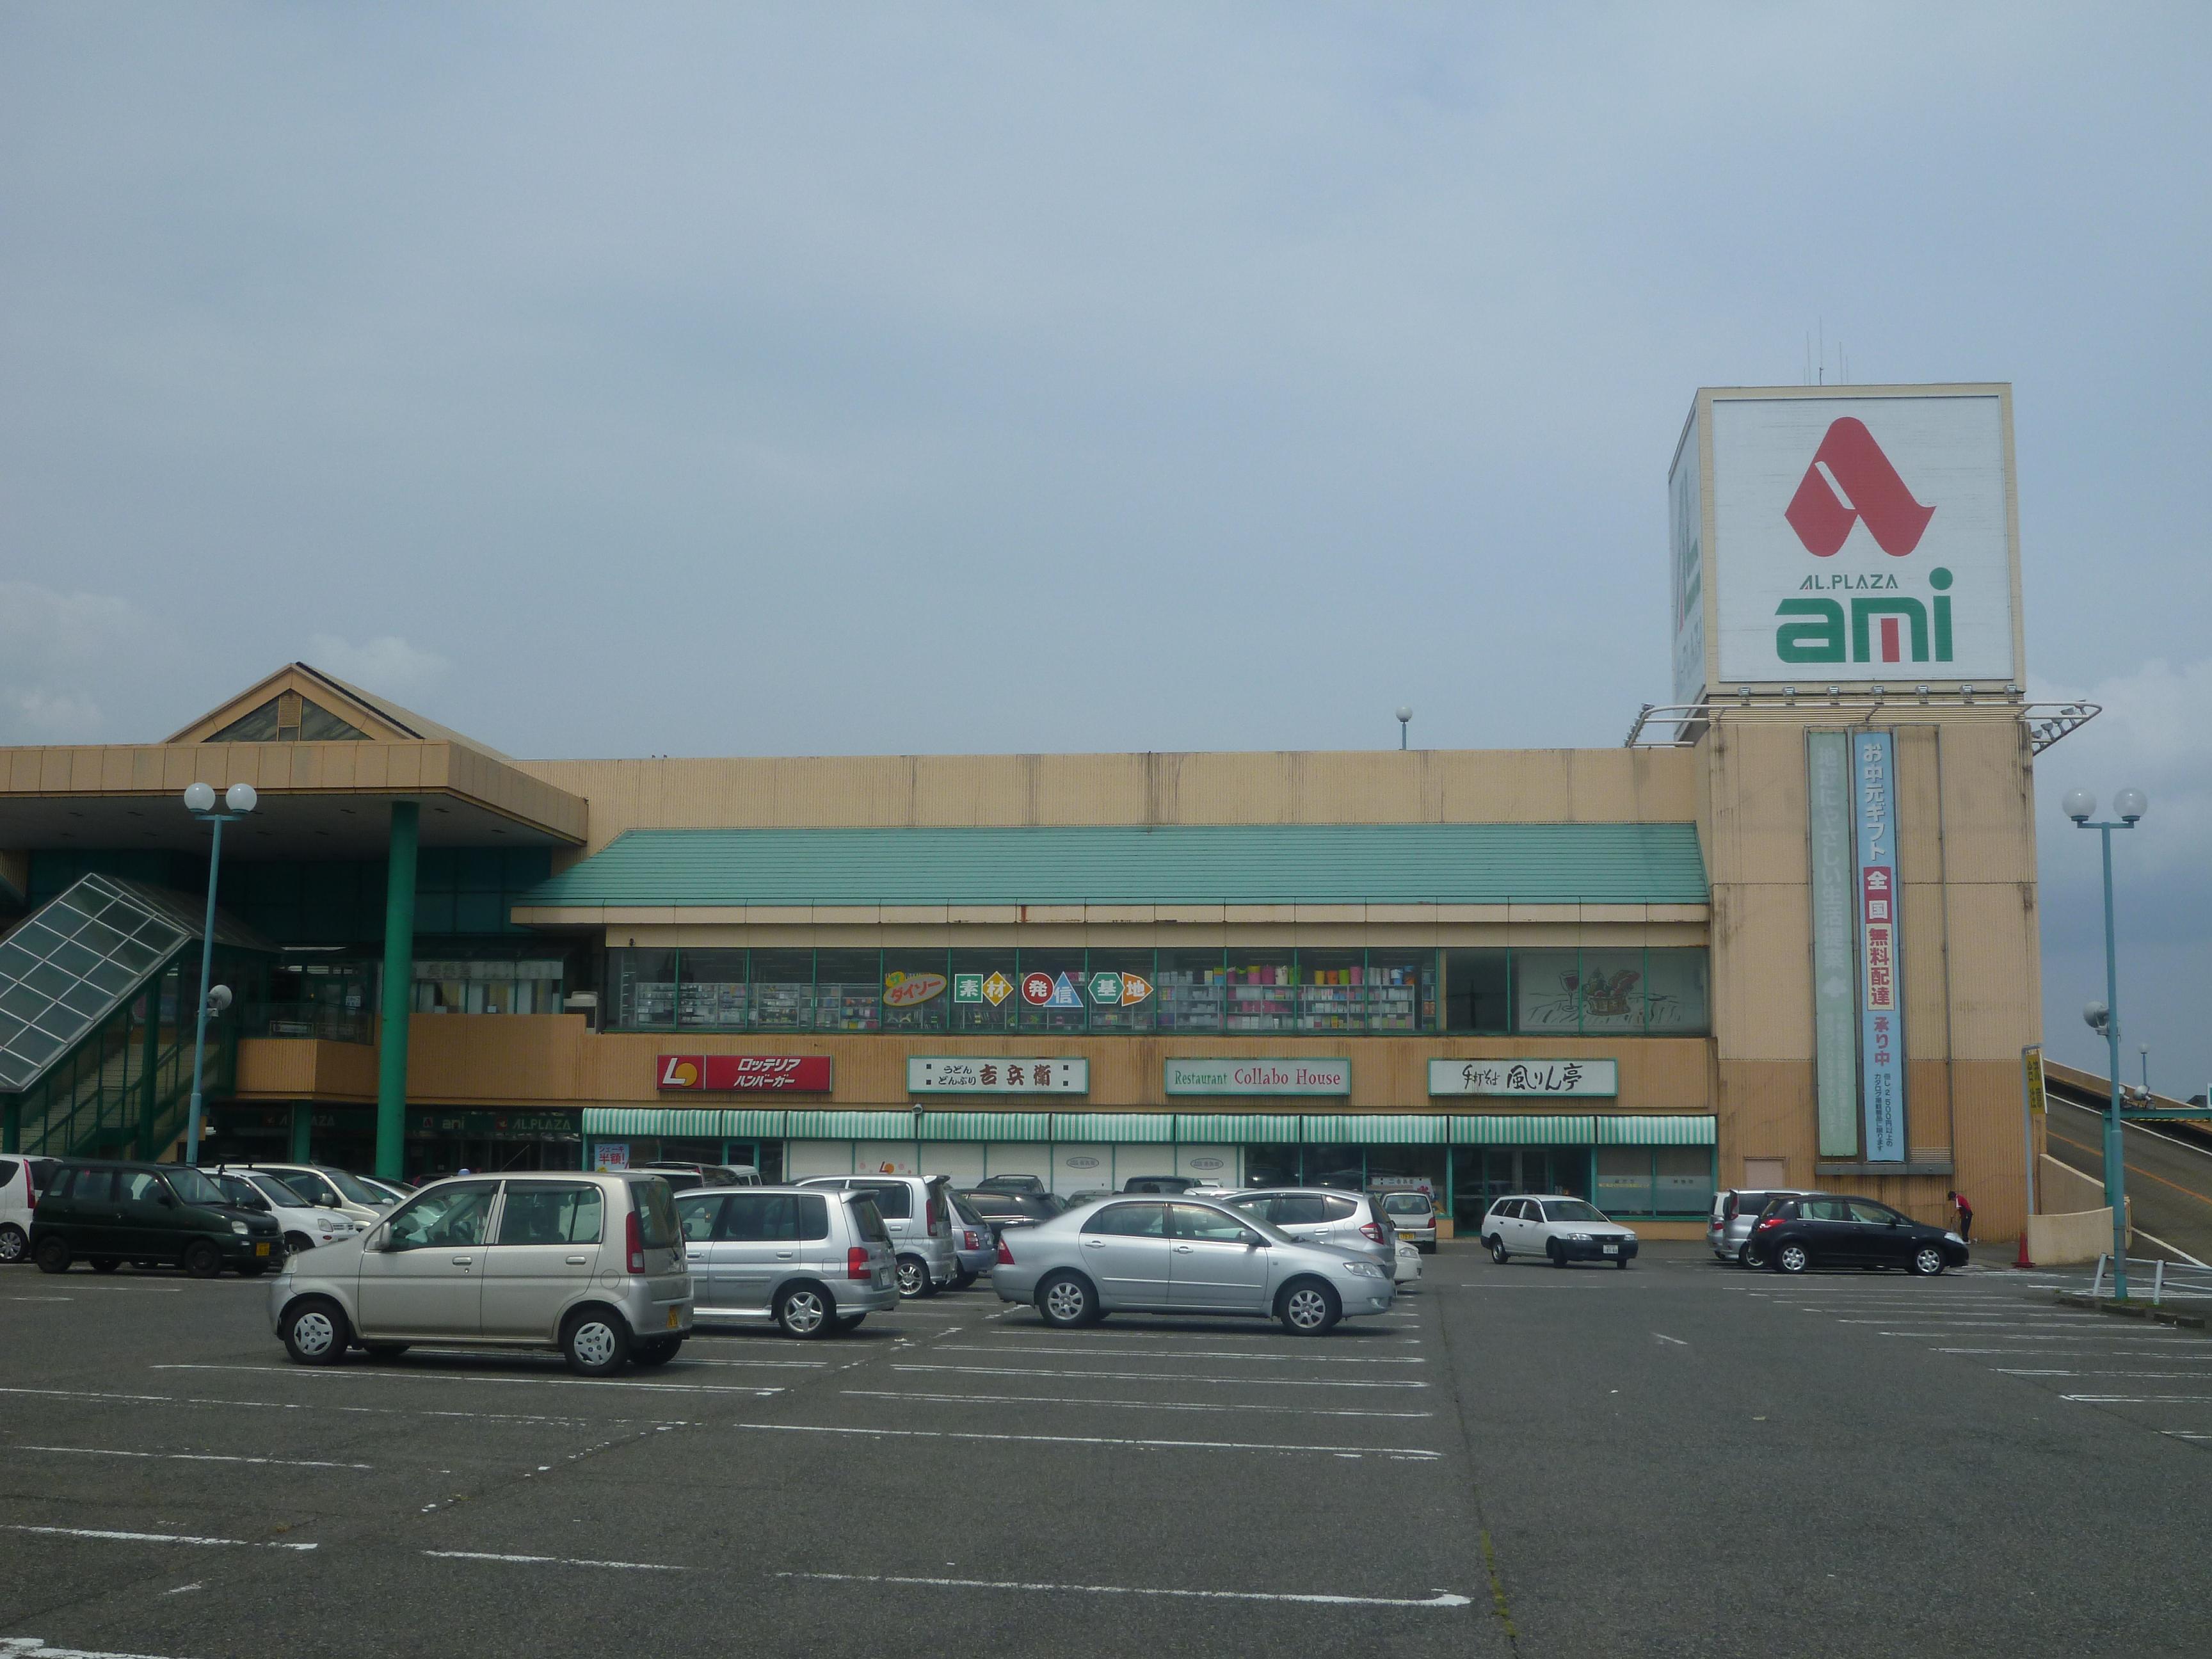 Shopping centre. Shopping Plaza 1558m to Ami (shopping center)